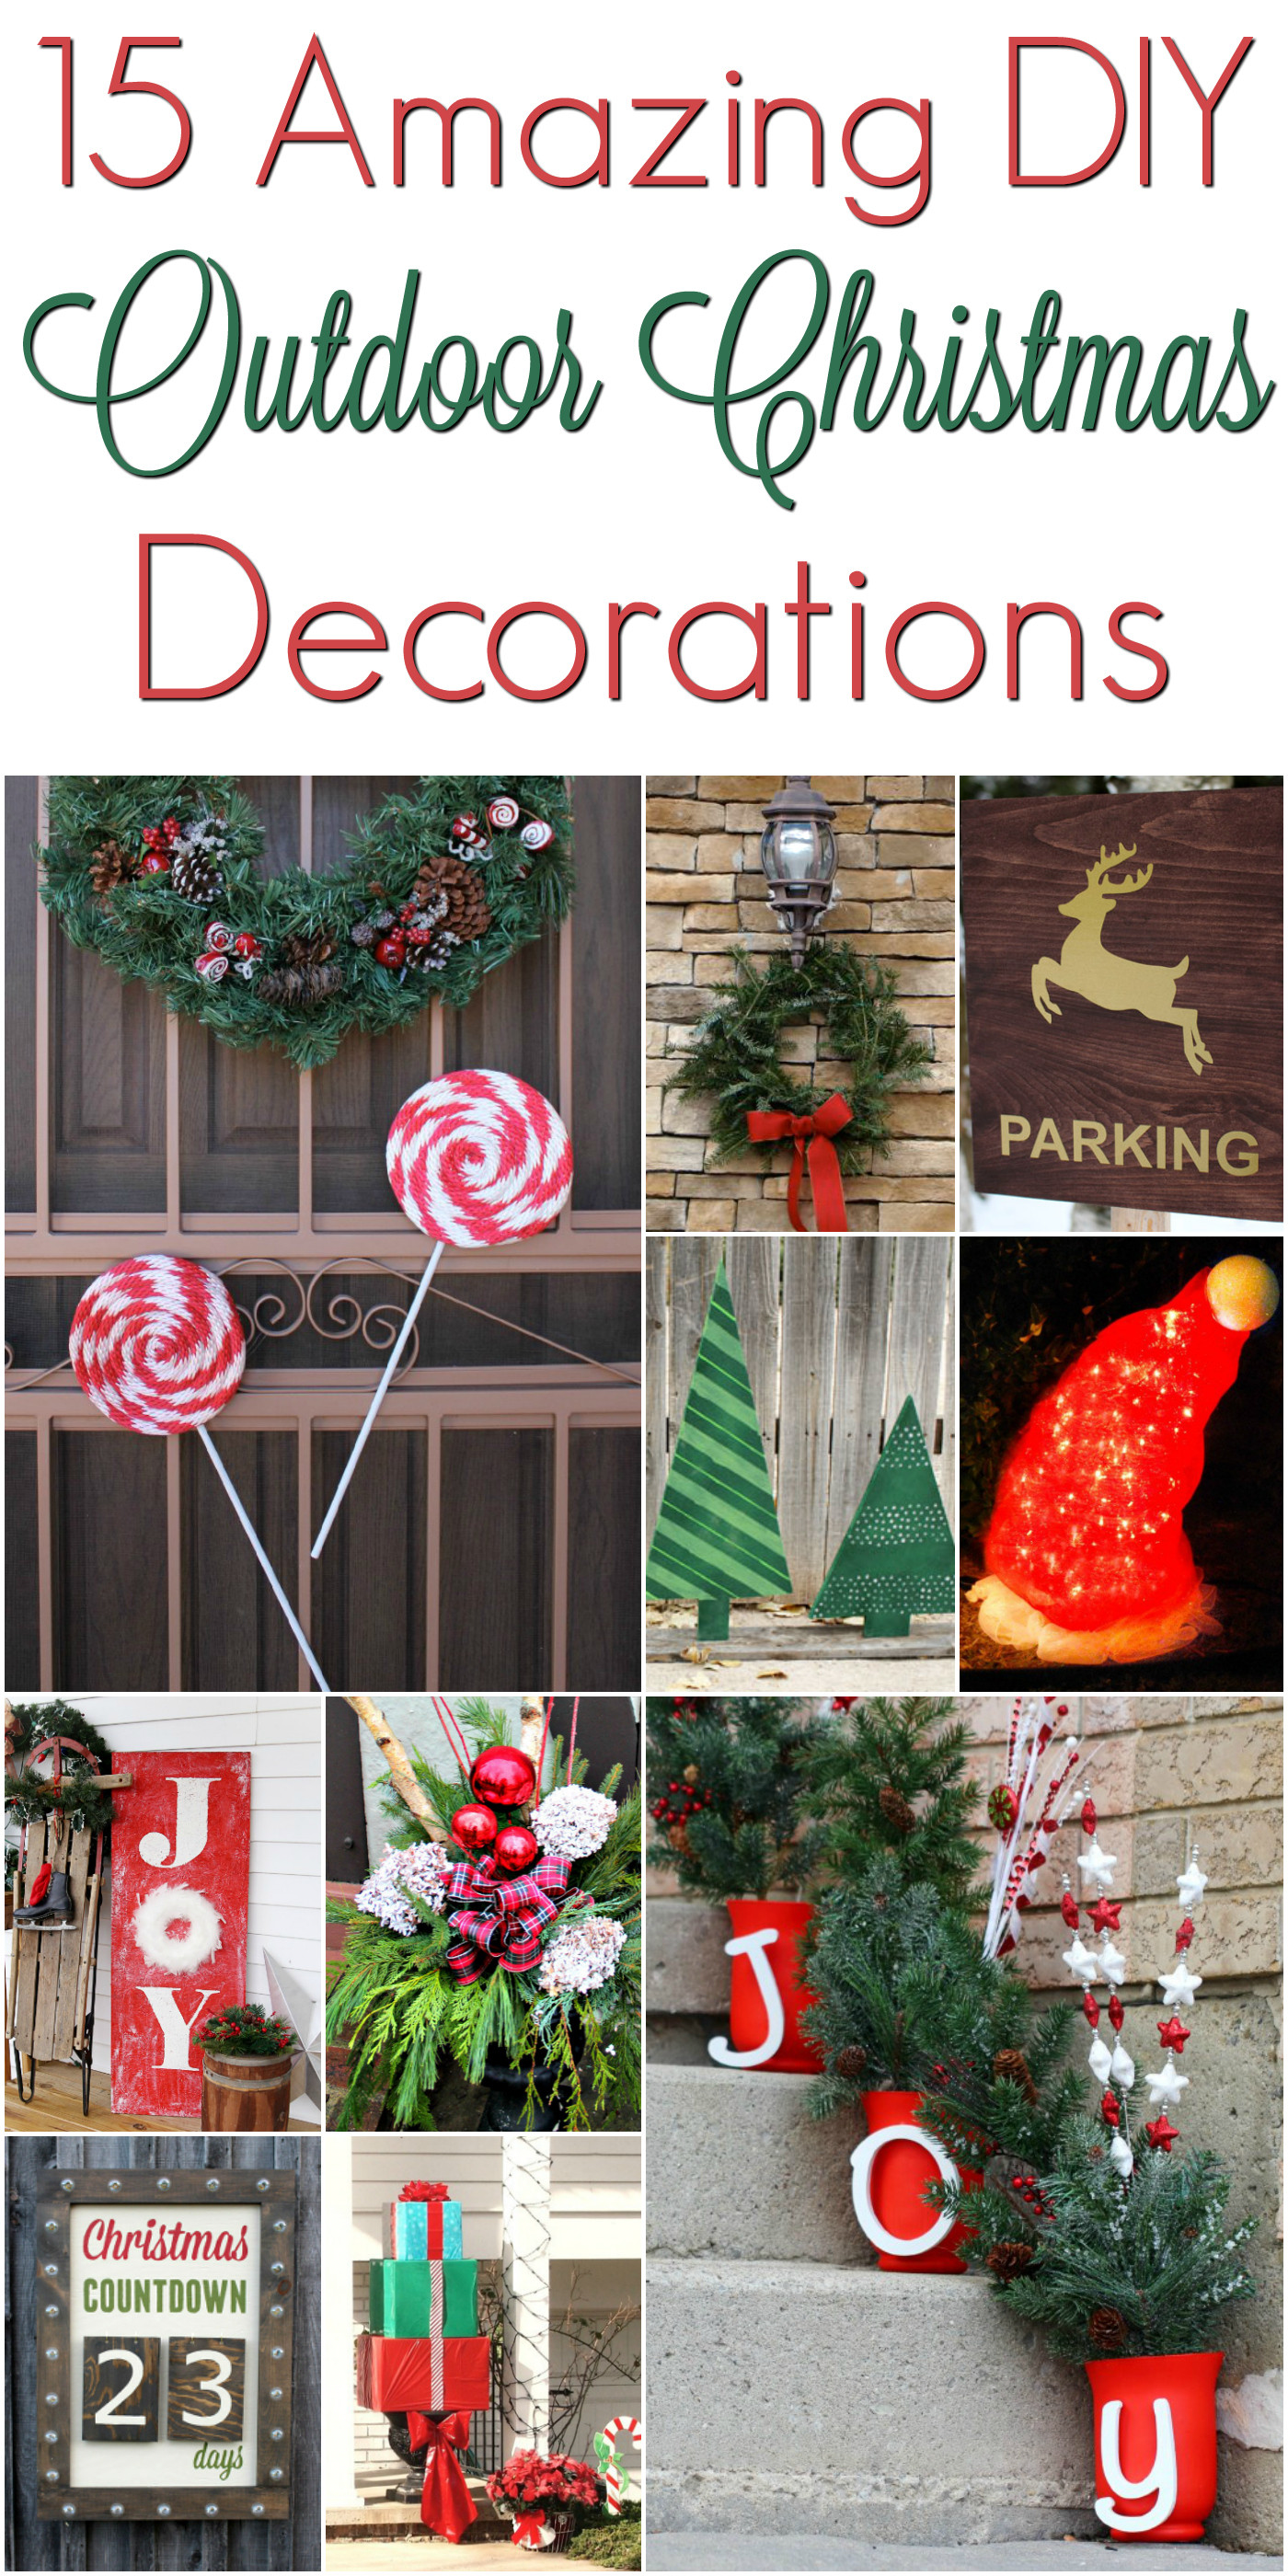 DIY Christmas Yard Decorations
 DIY Christmas Outdoor Decorations ChristmasDecorations